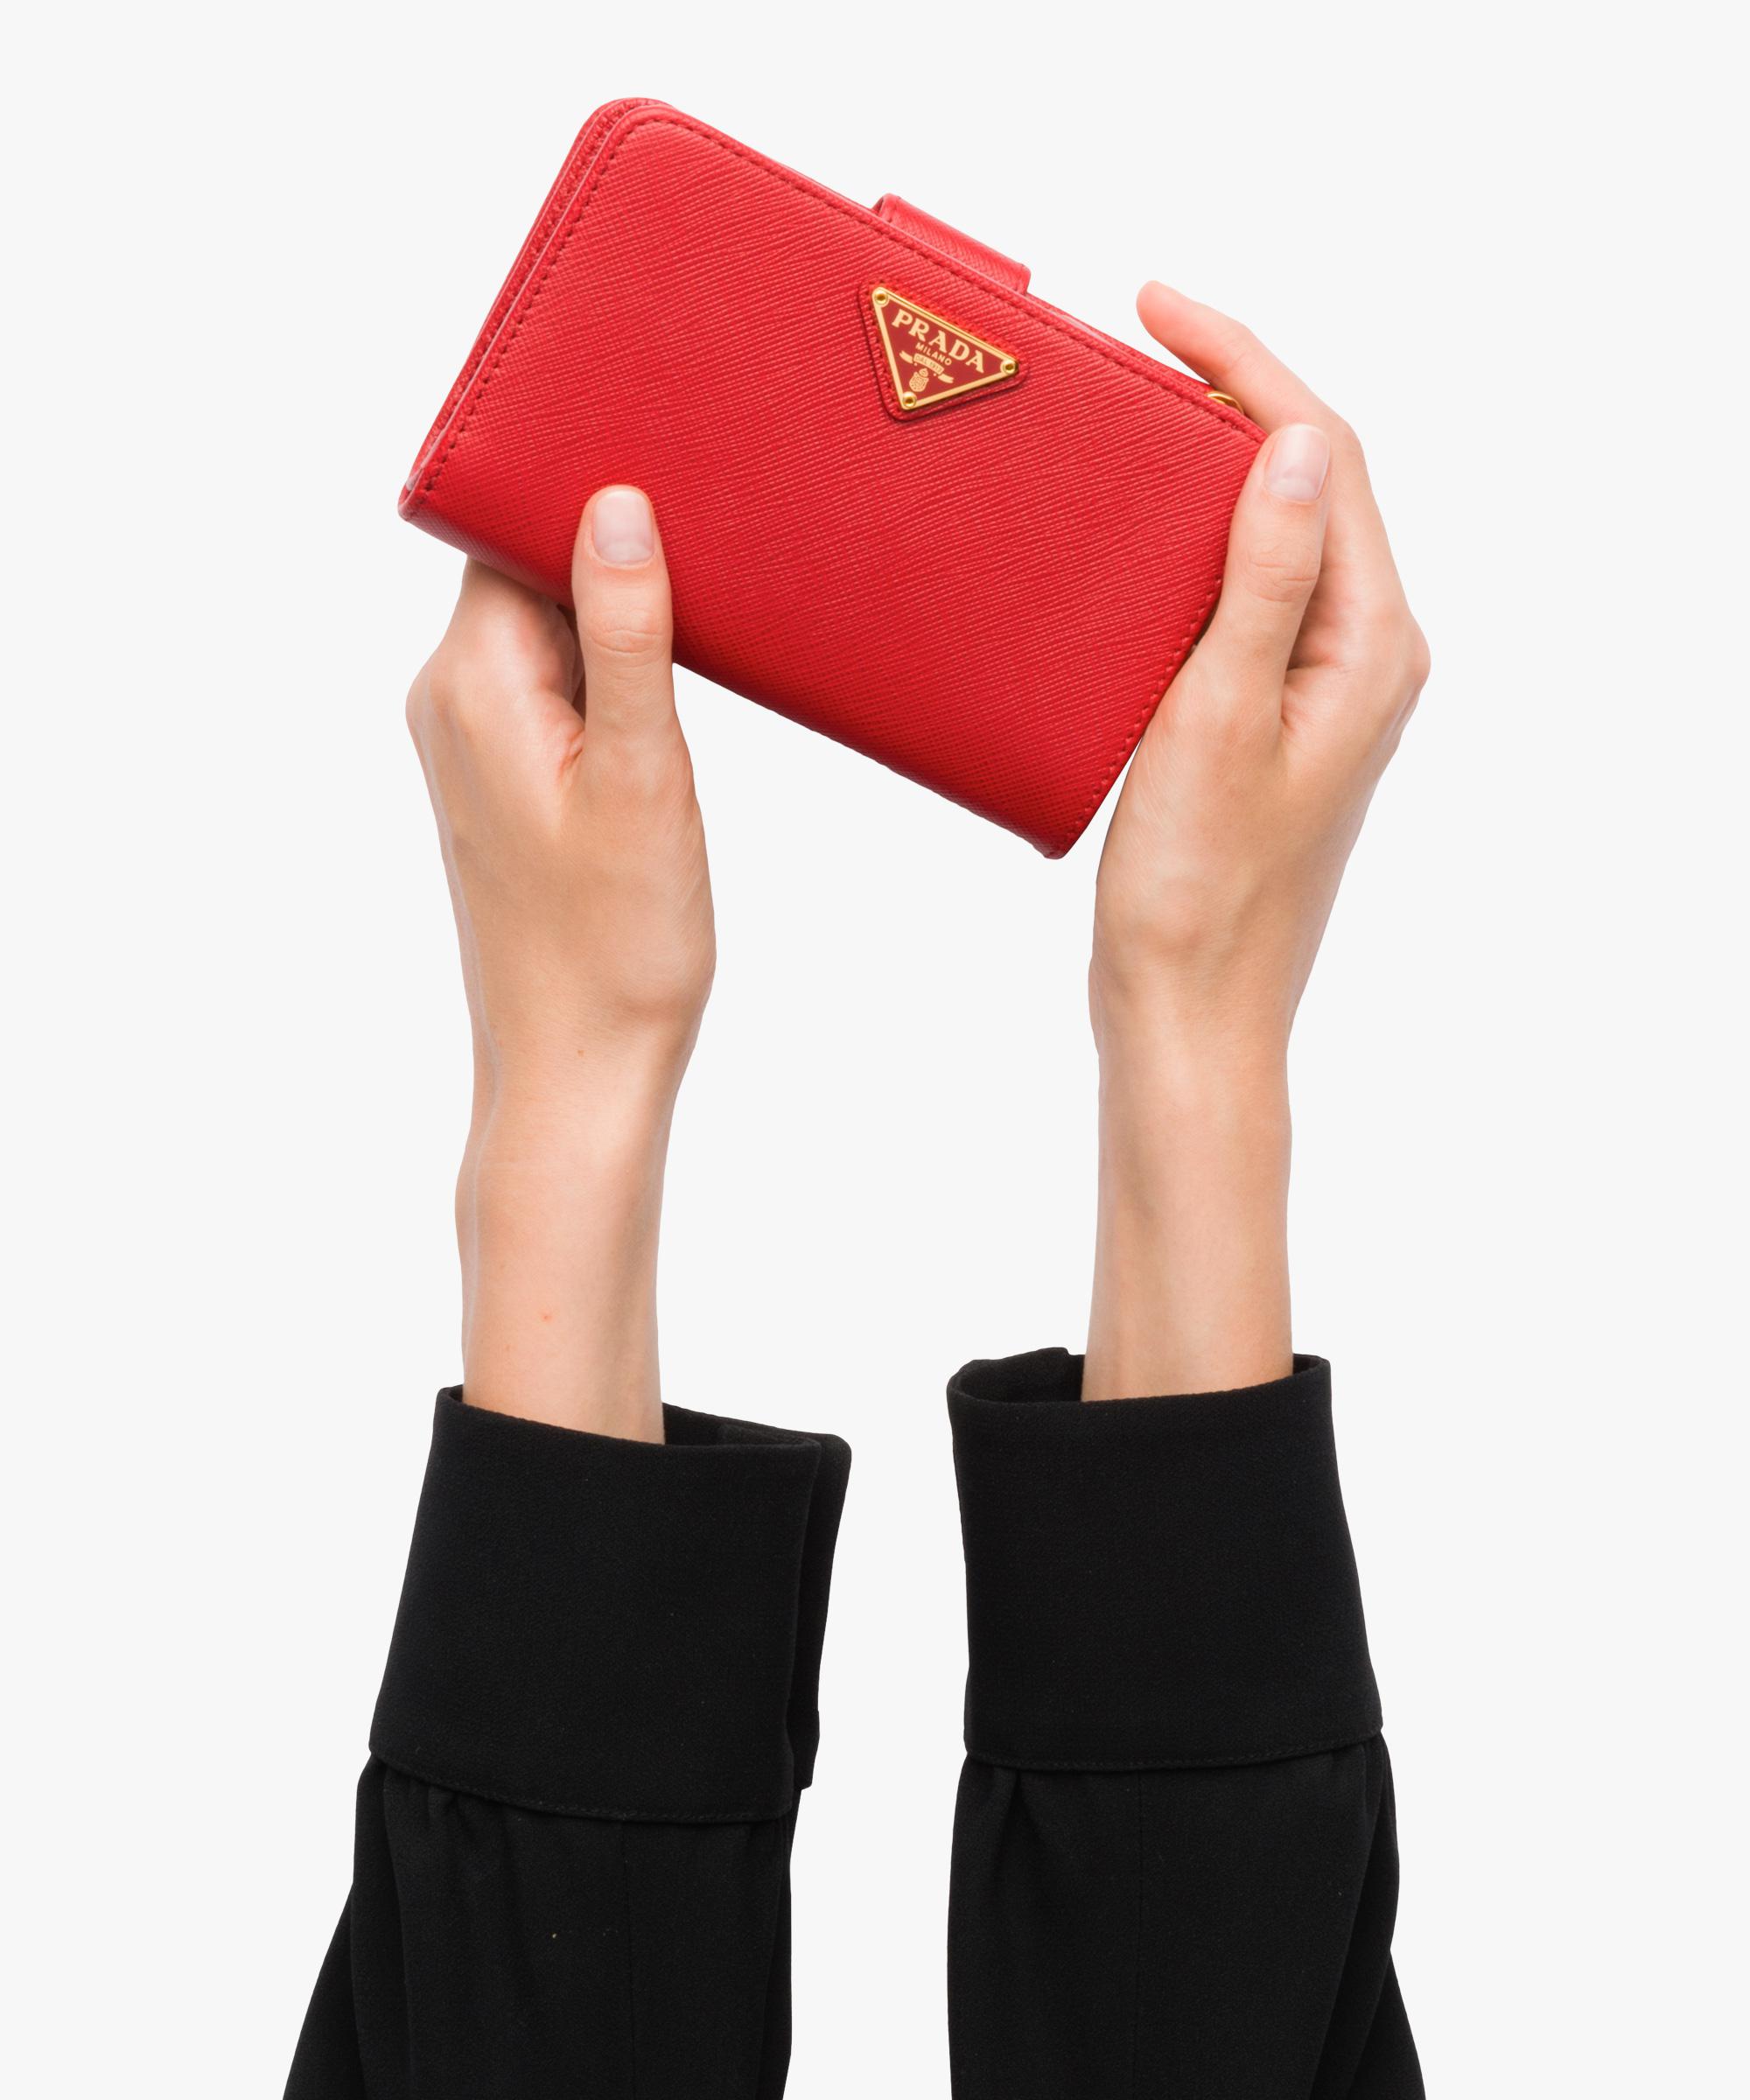 Prada Medium Saffiano Leather Wallet in Red | Lyst